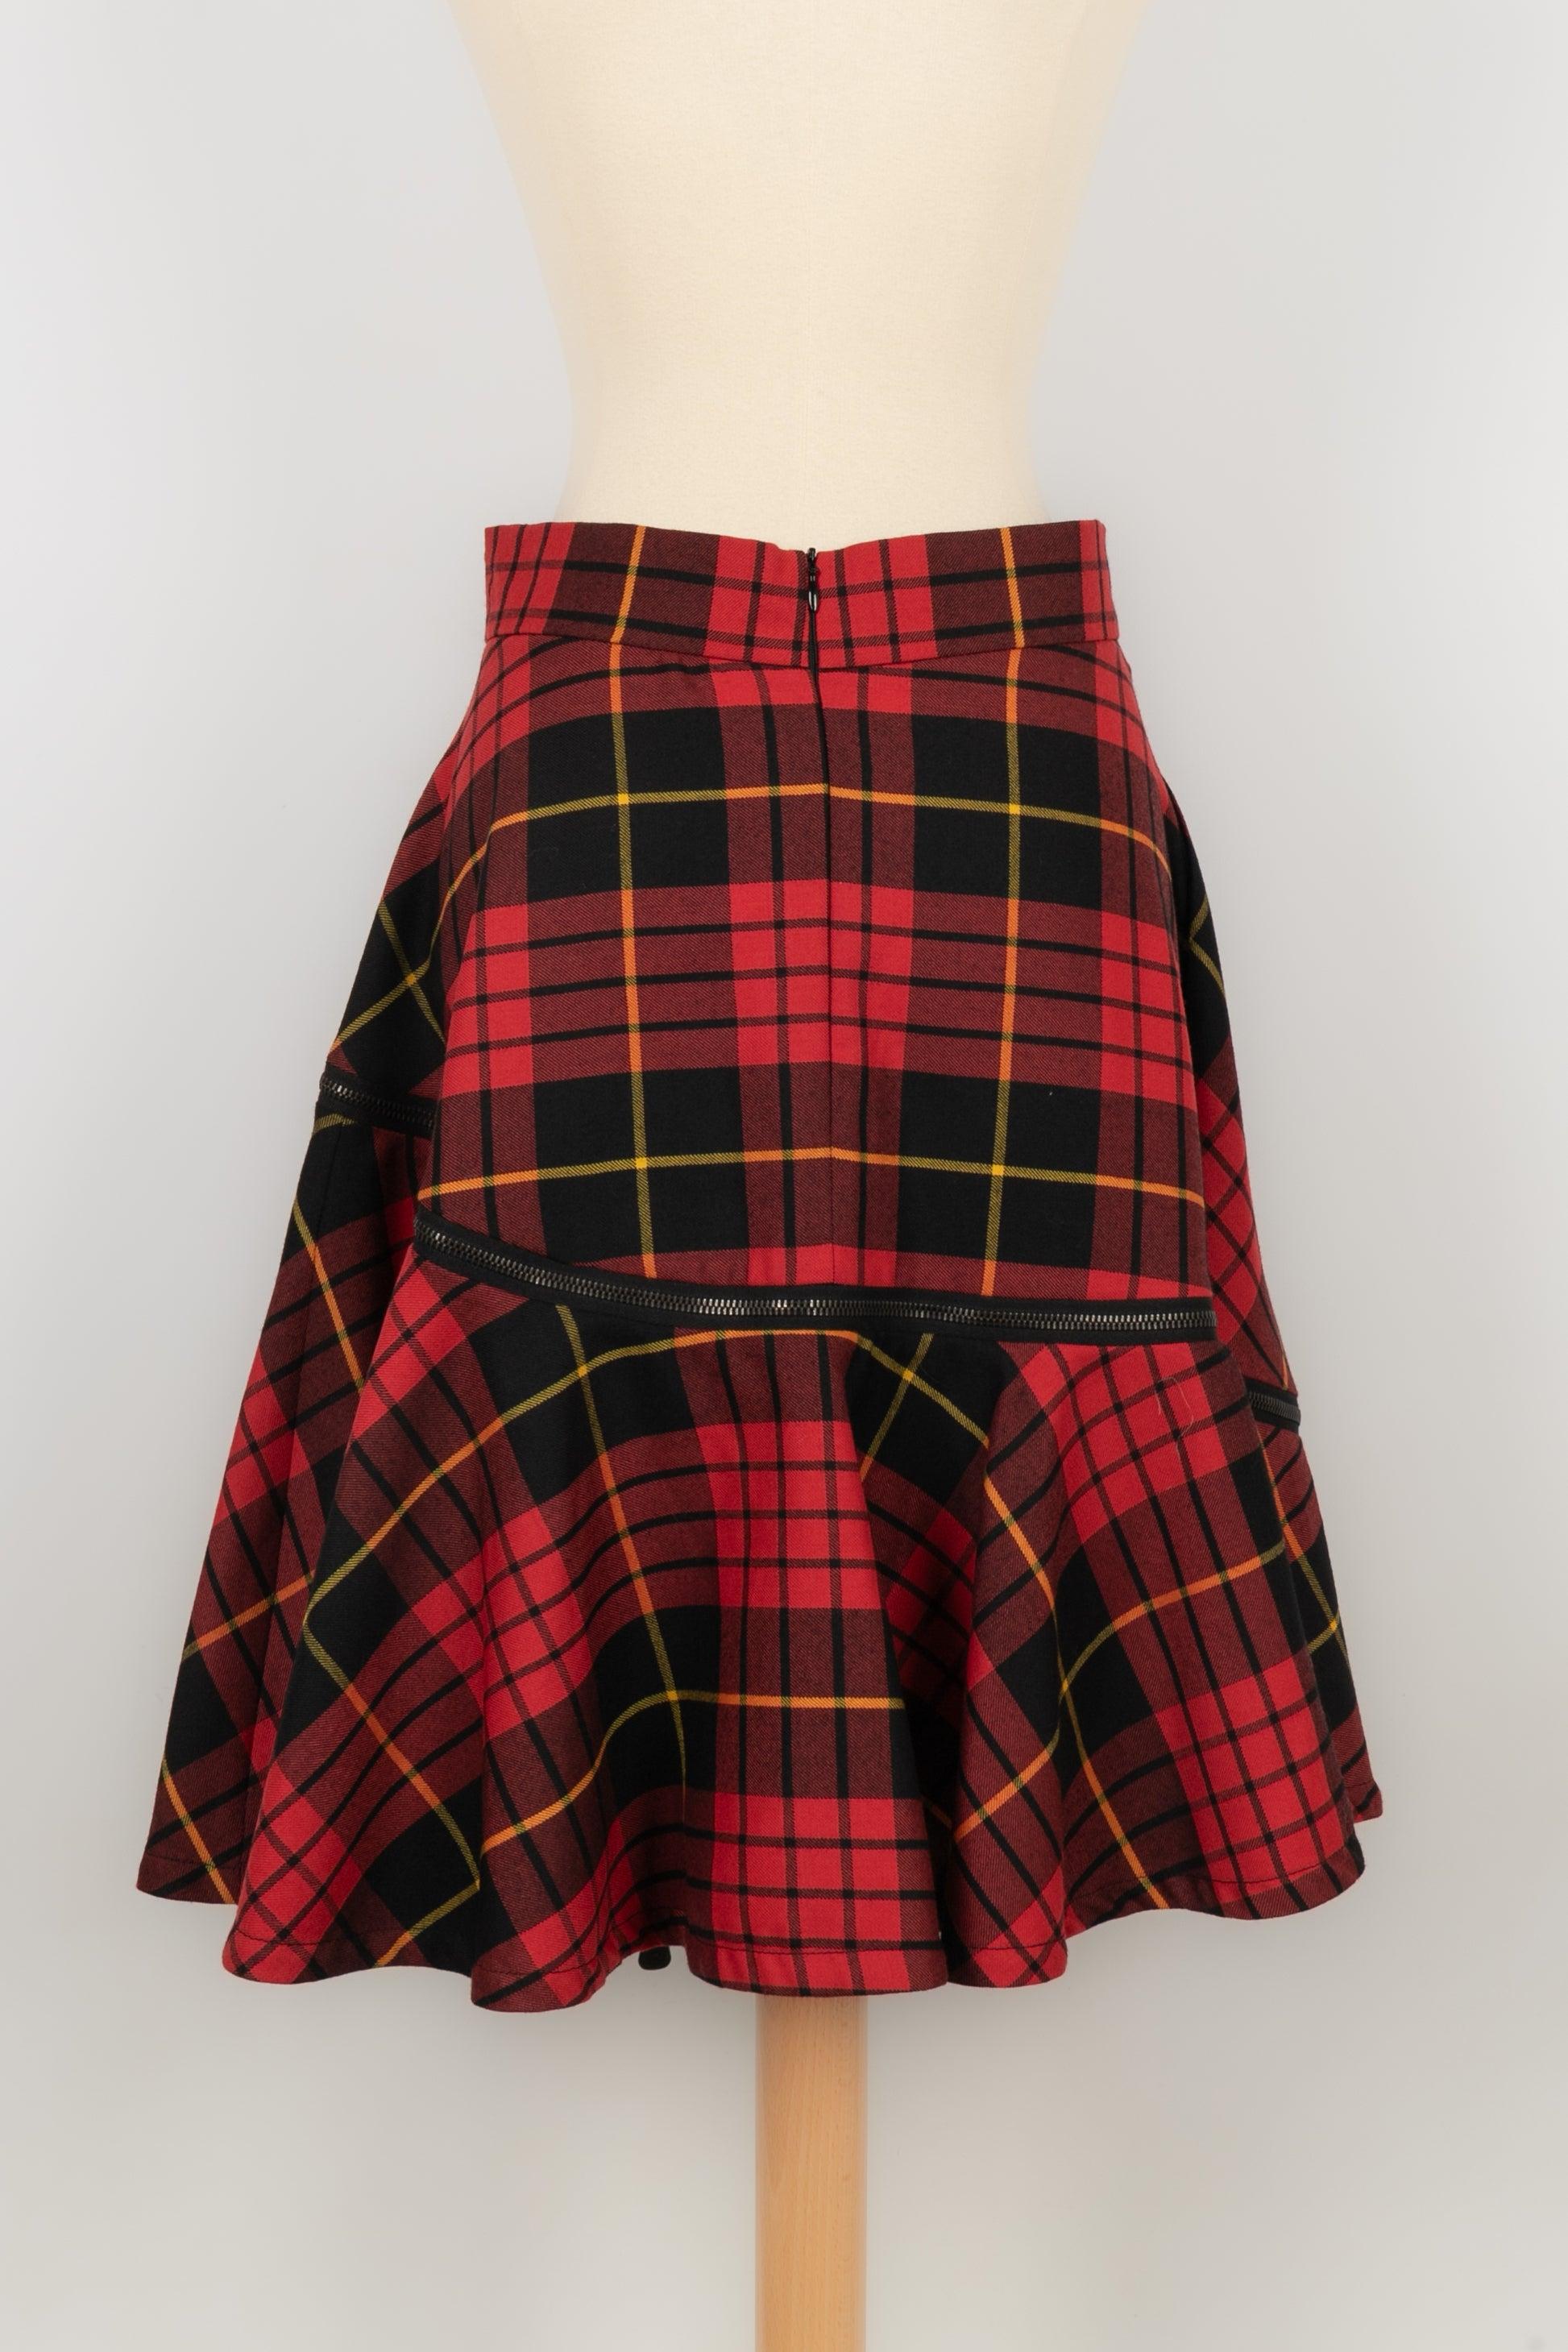 Alexander Mc Queen Red and Black Tone Tartan Skirt 40IT In Excellent Condition For Sale In SAINT-OUEN-SUR-SEINE, FR